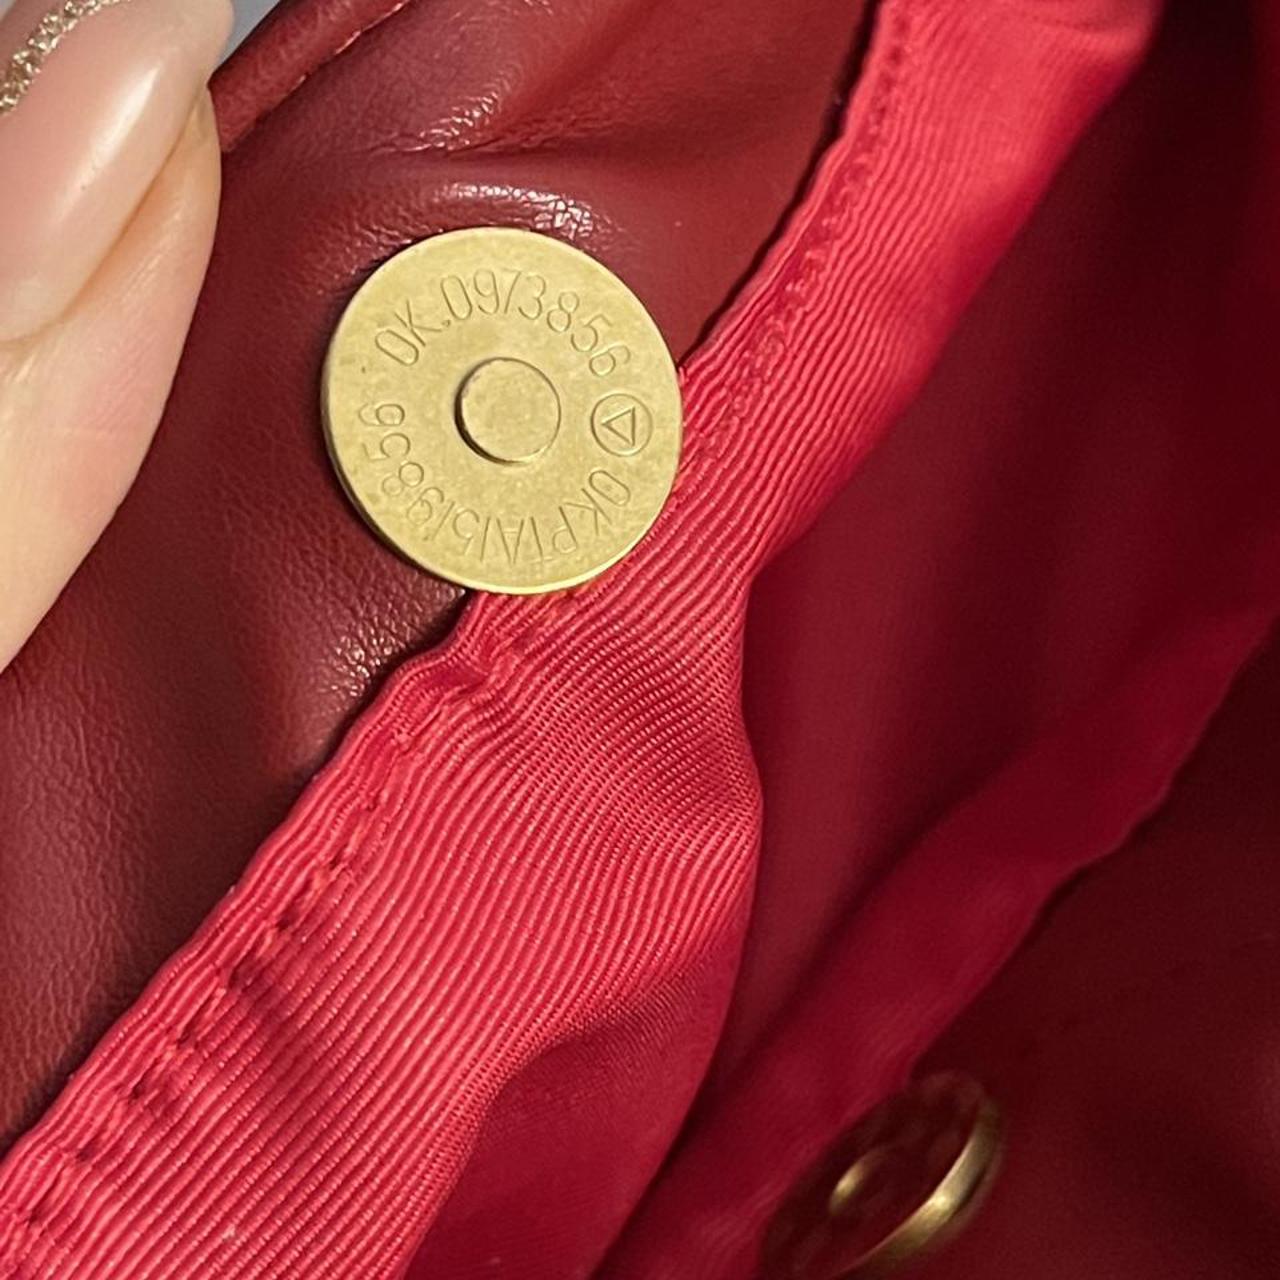 Product Image 3 - Chanel handbag wine red colour